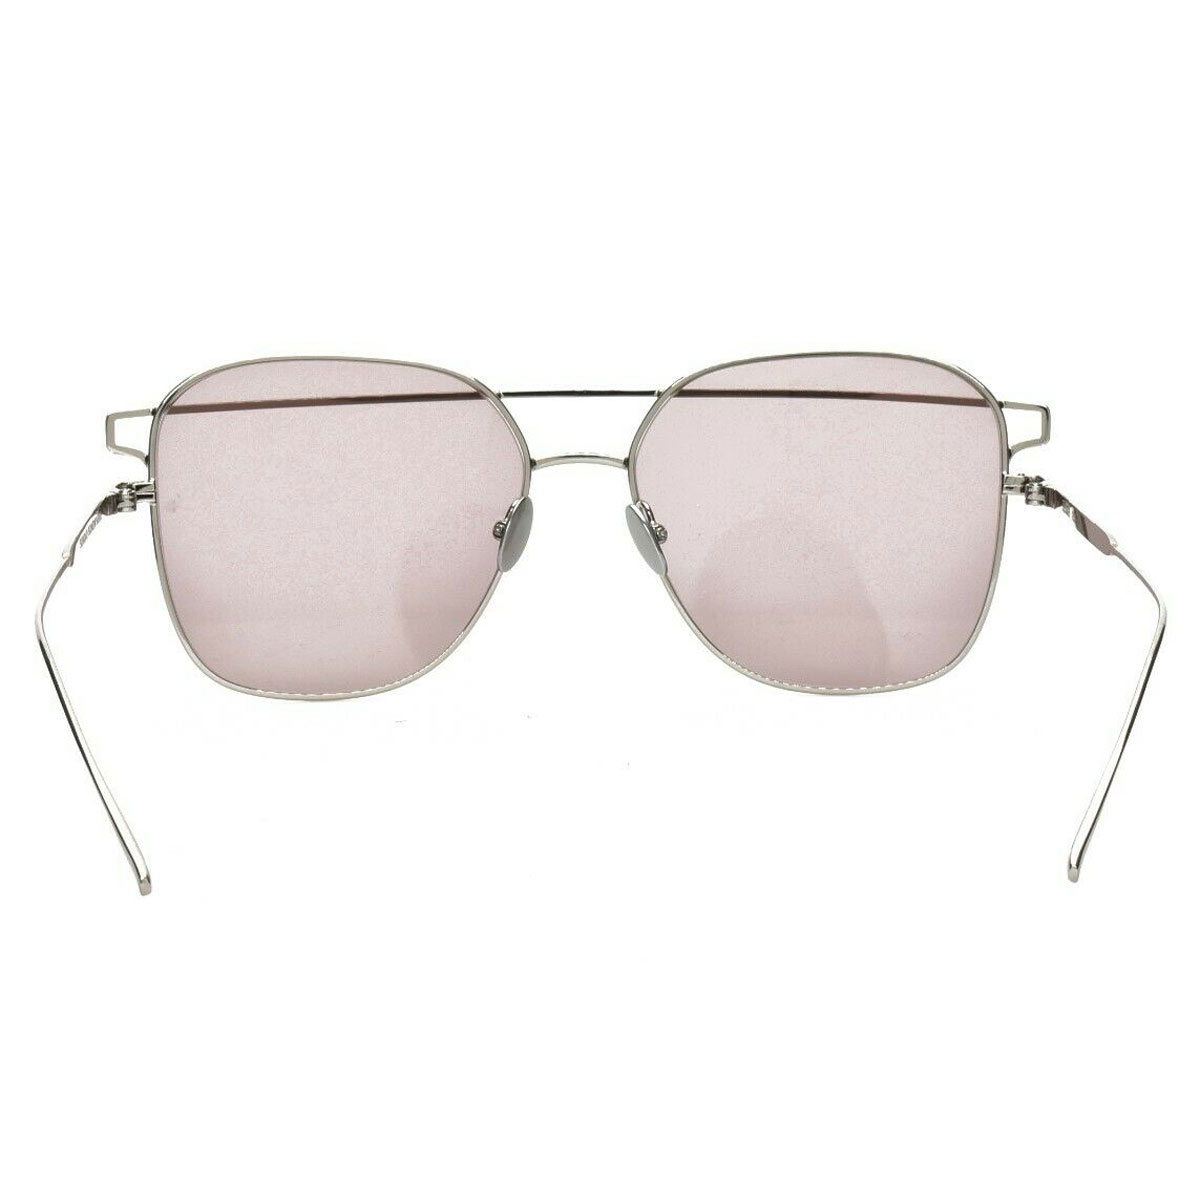 Sunday Somewhere JESSE-SIL Women's Jesse Silver Frame Sunglasses - image 2 of 5